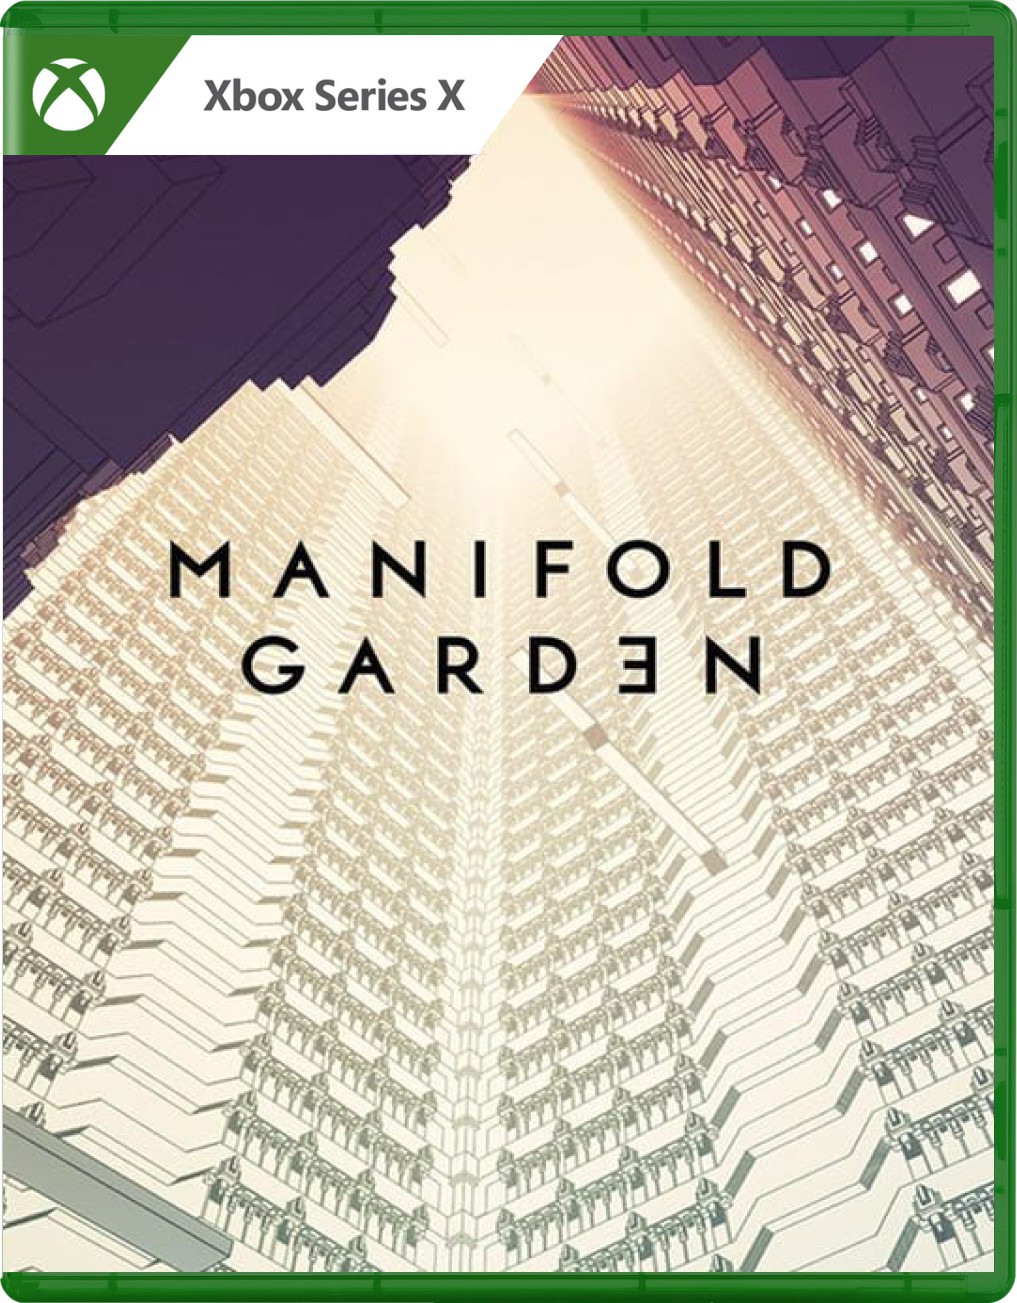 Manifold Garden